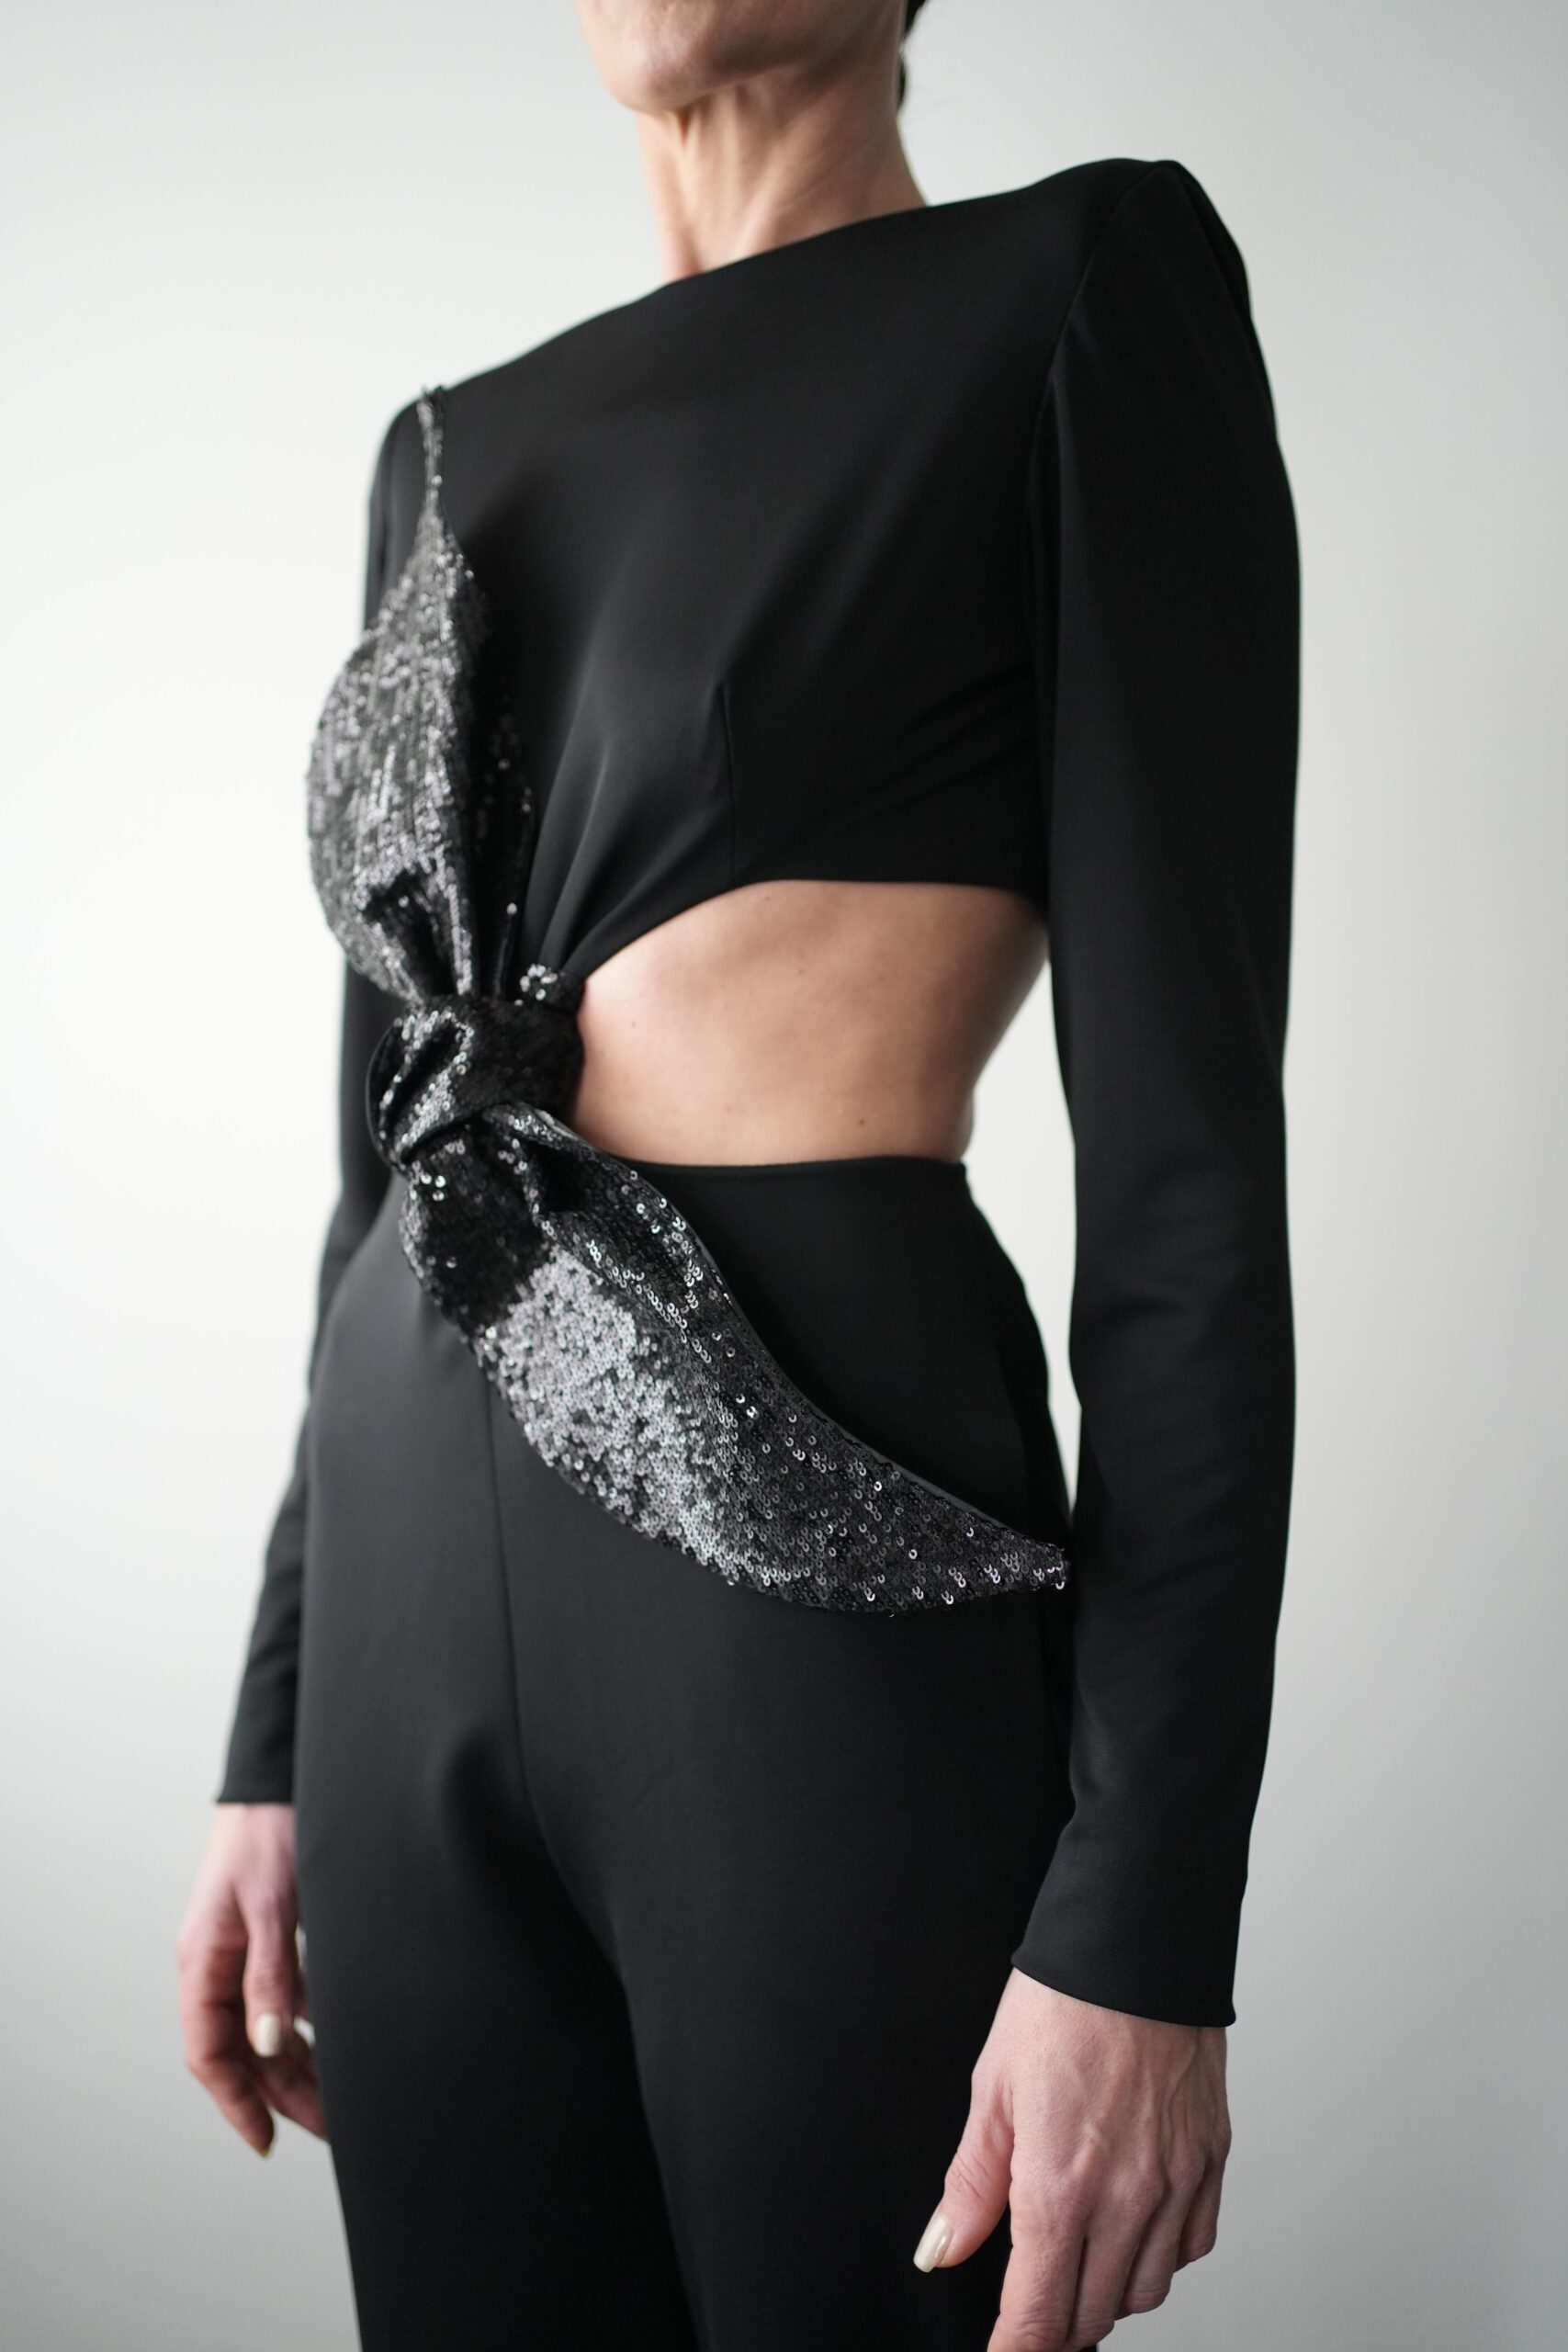 190-Bow-jumpsuit-Veintitres.01-Collection-Flamenco-Fashion-1.jpg